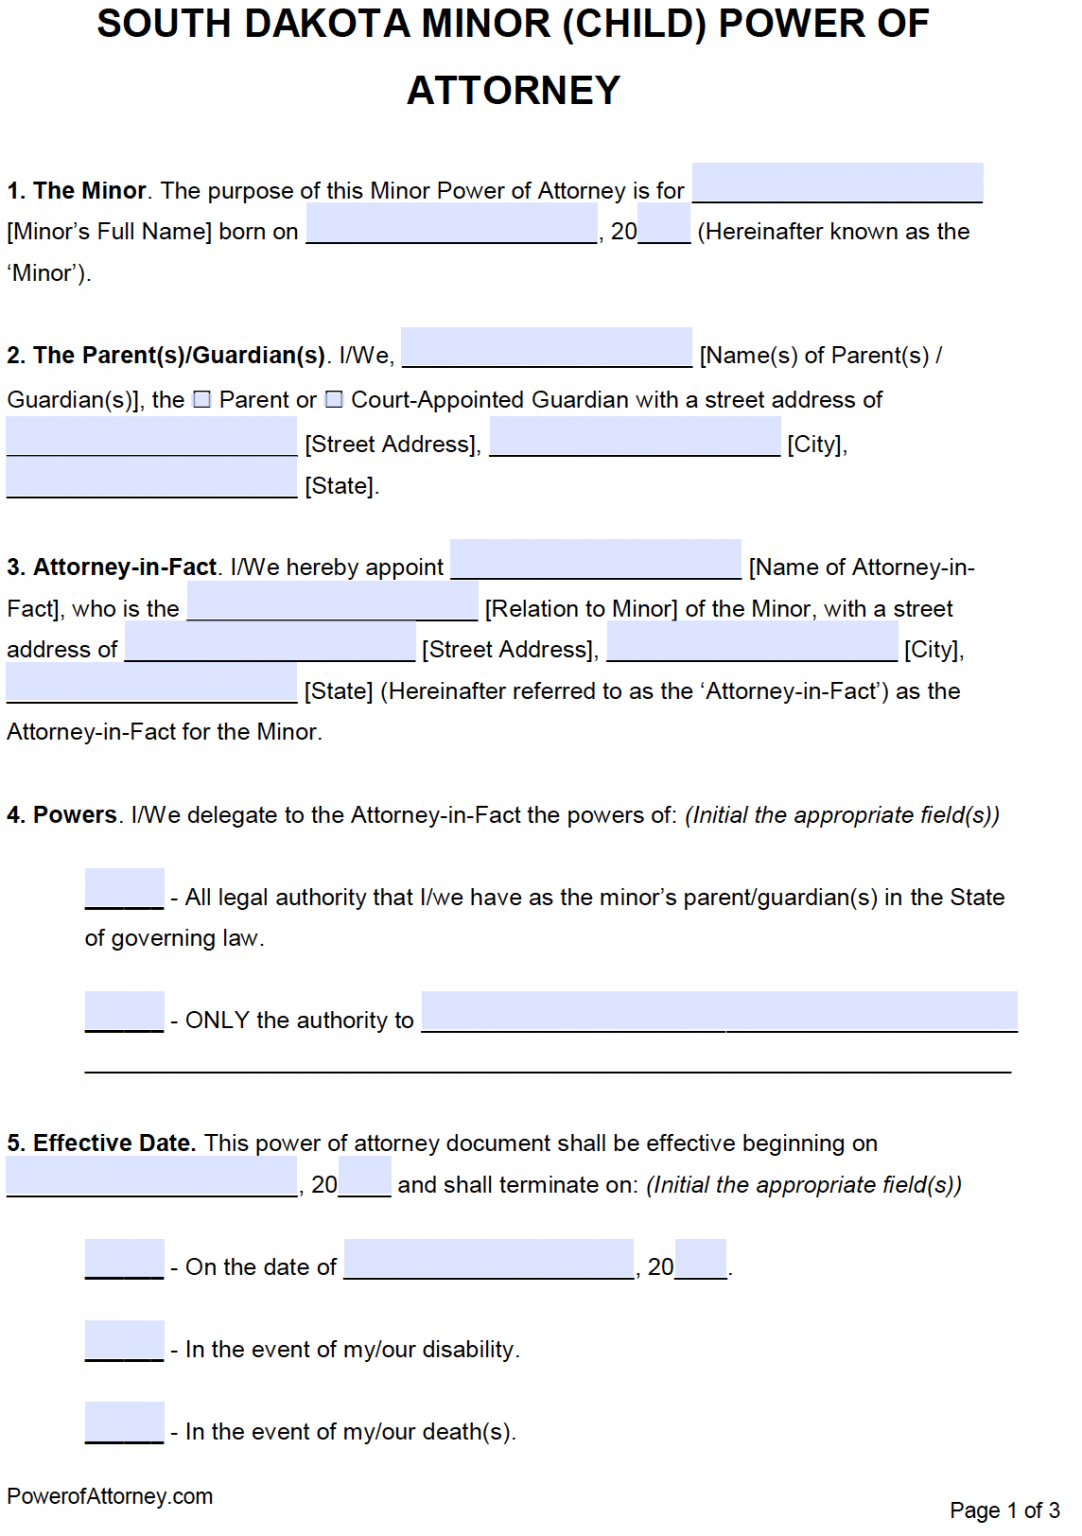 free-south-dakota-power-of-attorney-forms-pdf-templates